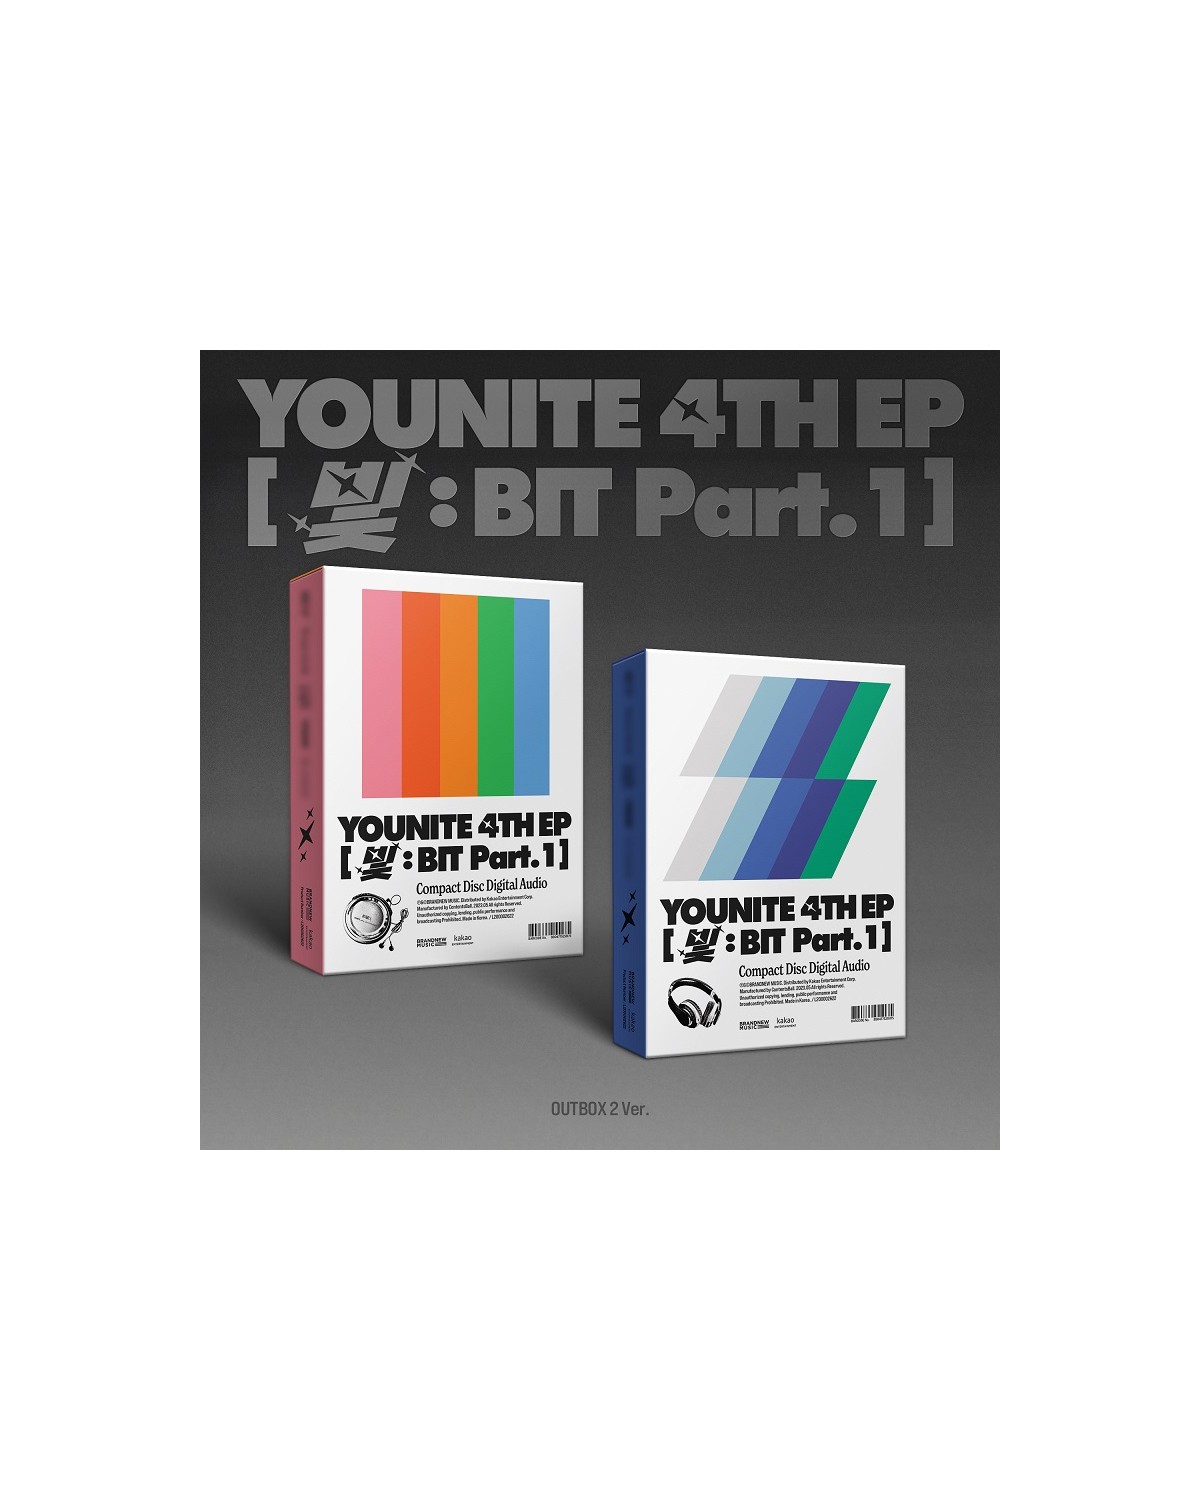 younite kpop album part 1